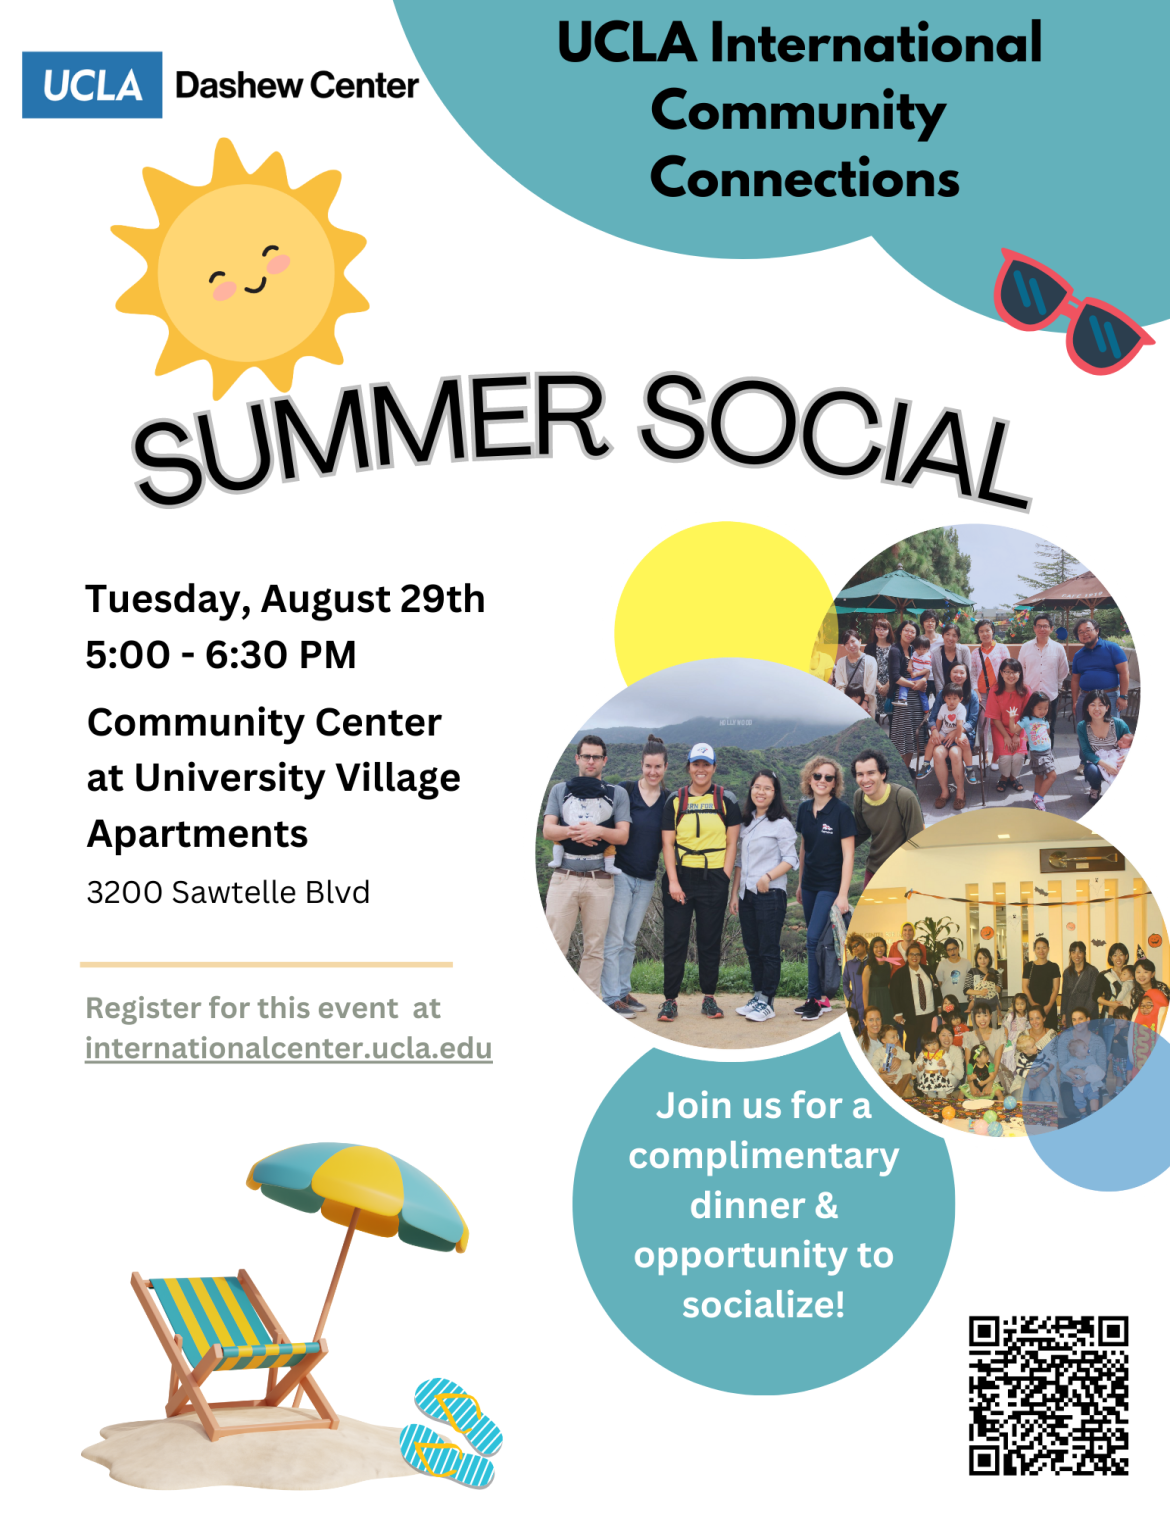 Summer Social - International Community Connections 